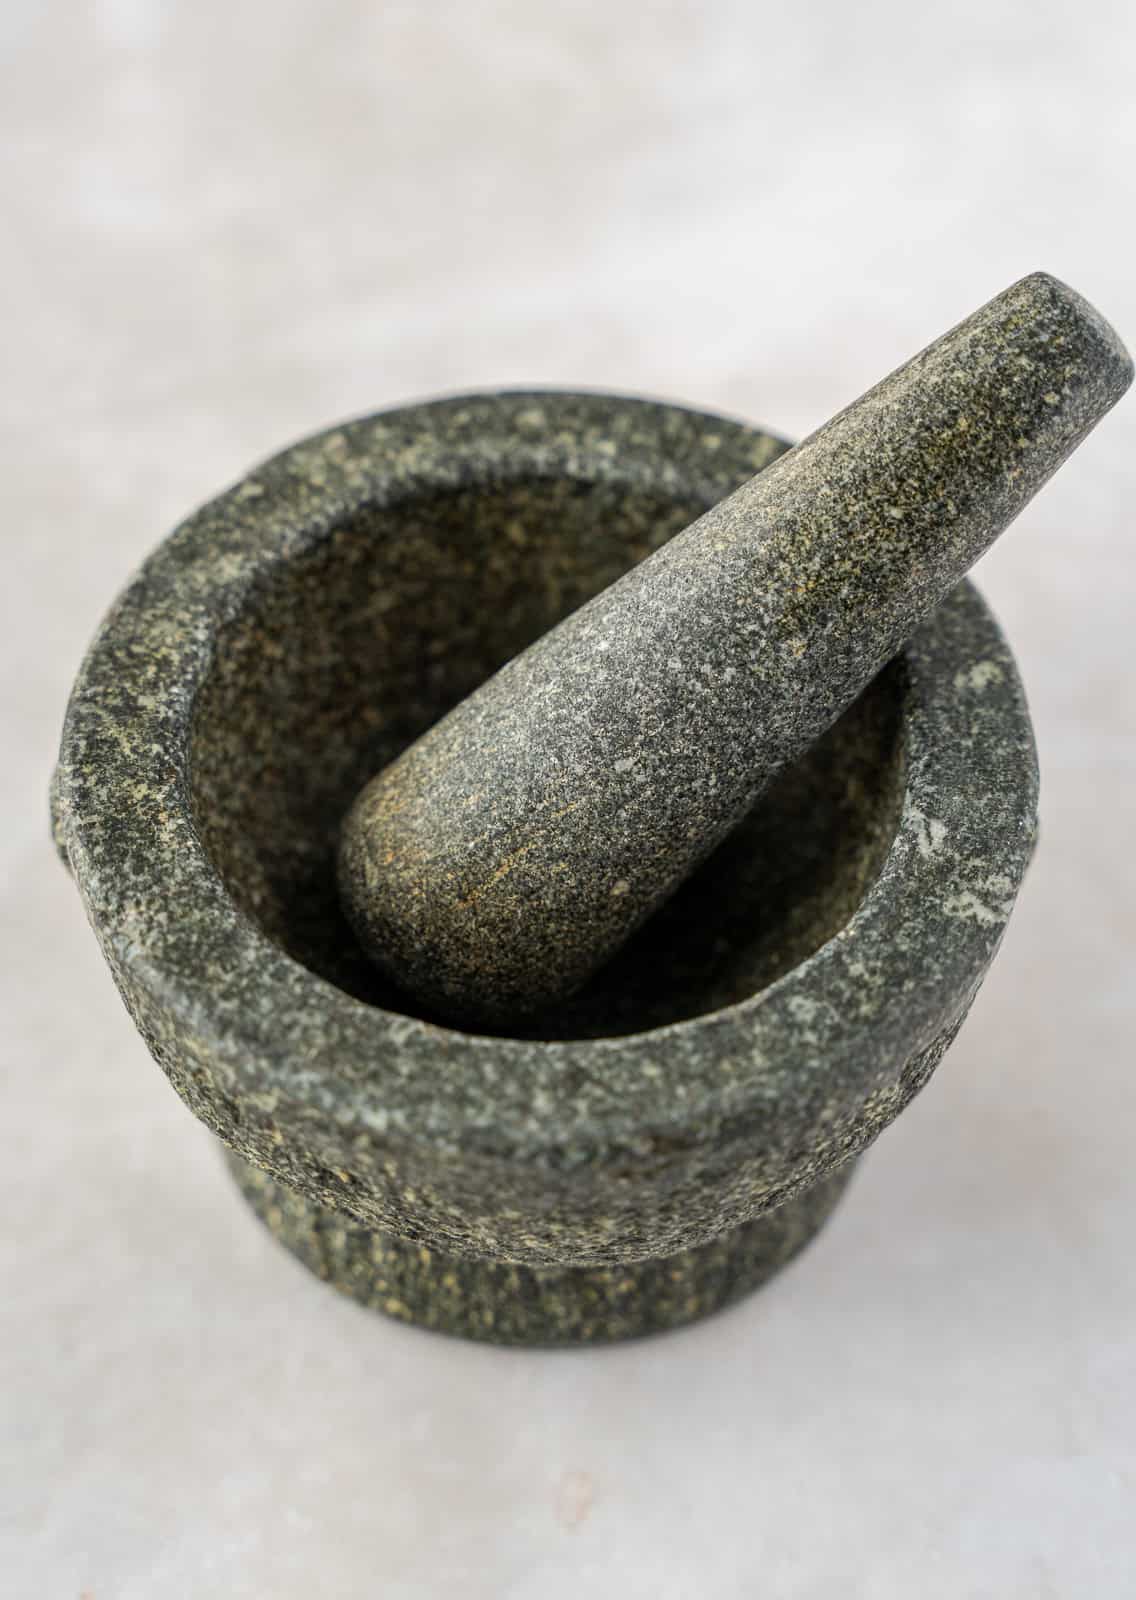 A granite mortar an pestle or molcajete in Spanish.